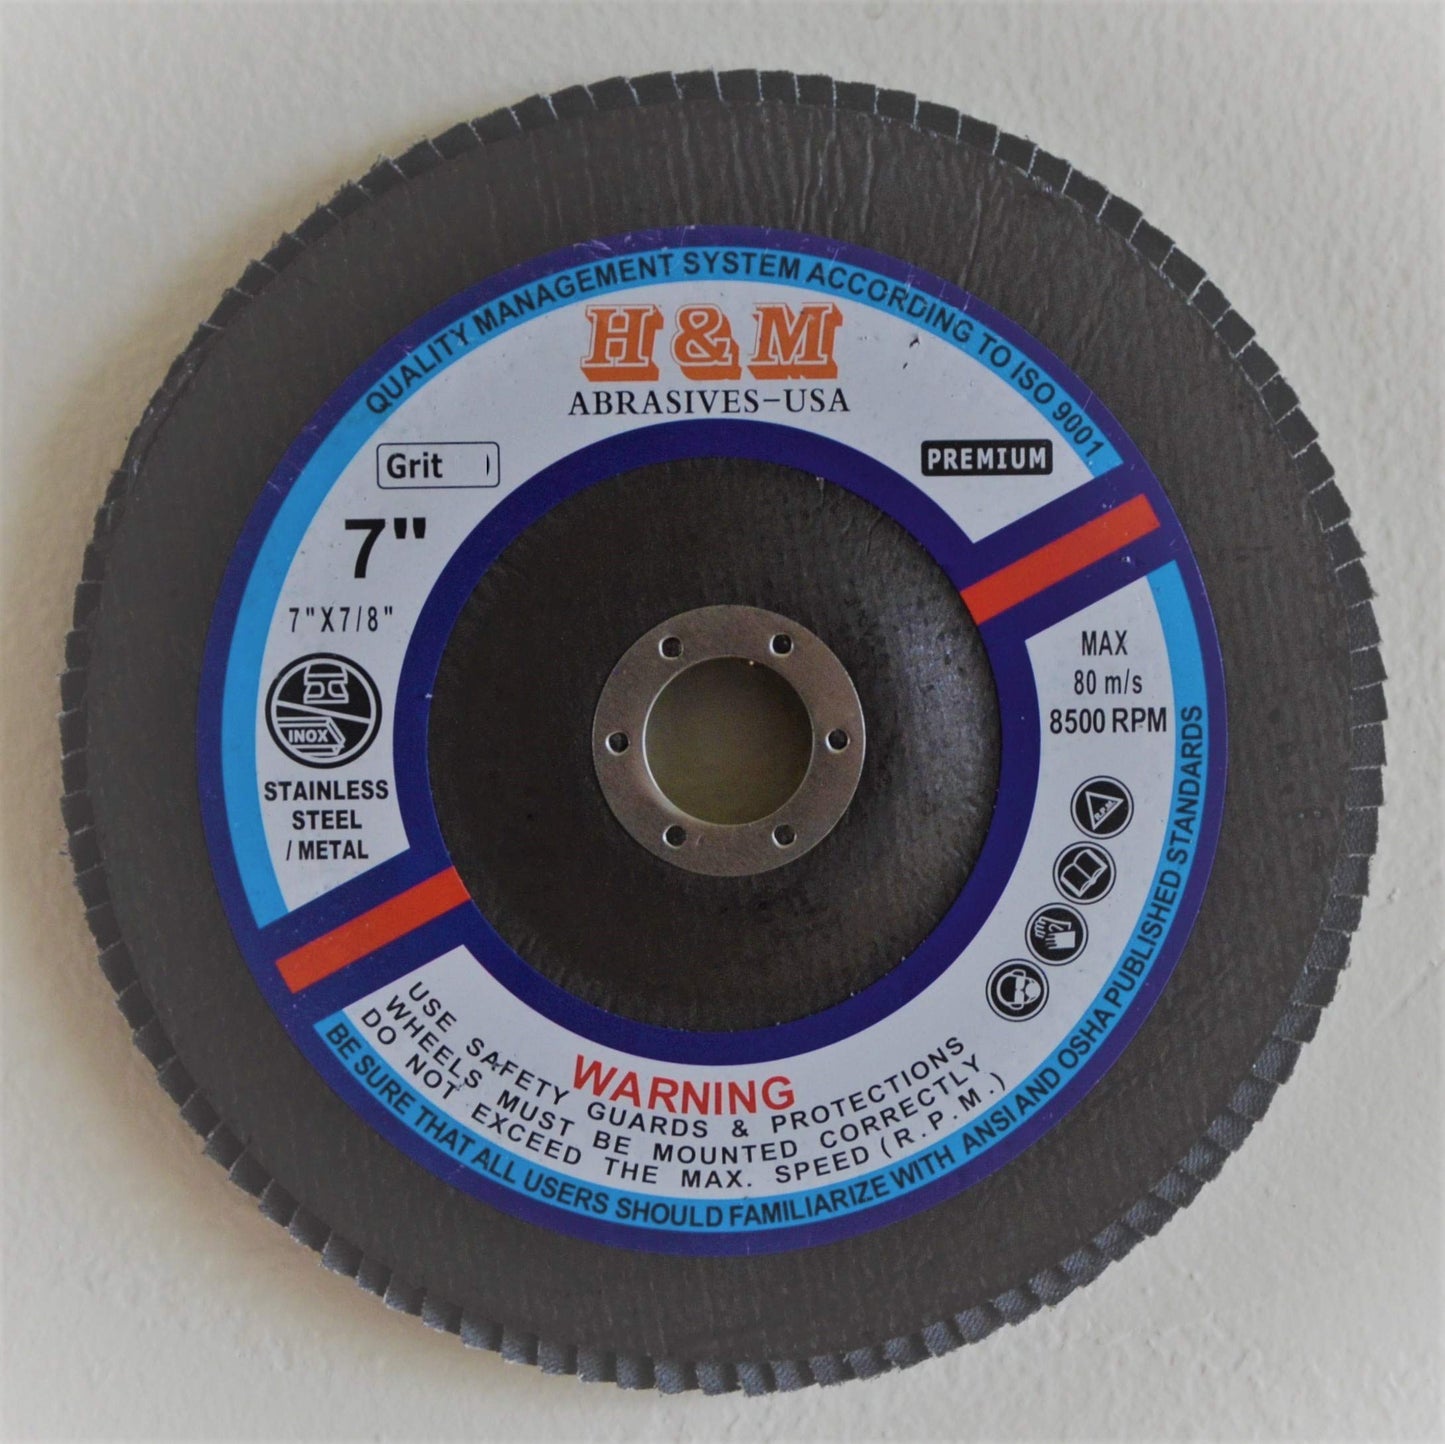 Premium FLAP DISCS 7" x 7/8" Zirconia 40 grit Grinding Wheel grinder tool - 5pcs Pack